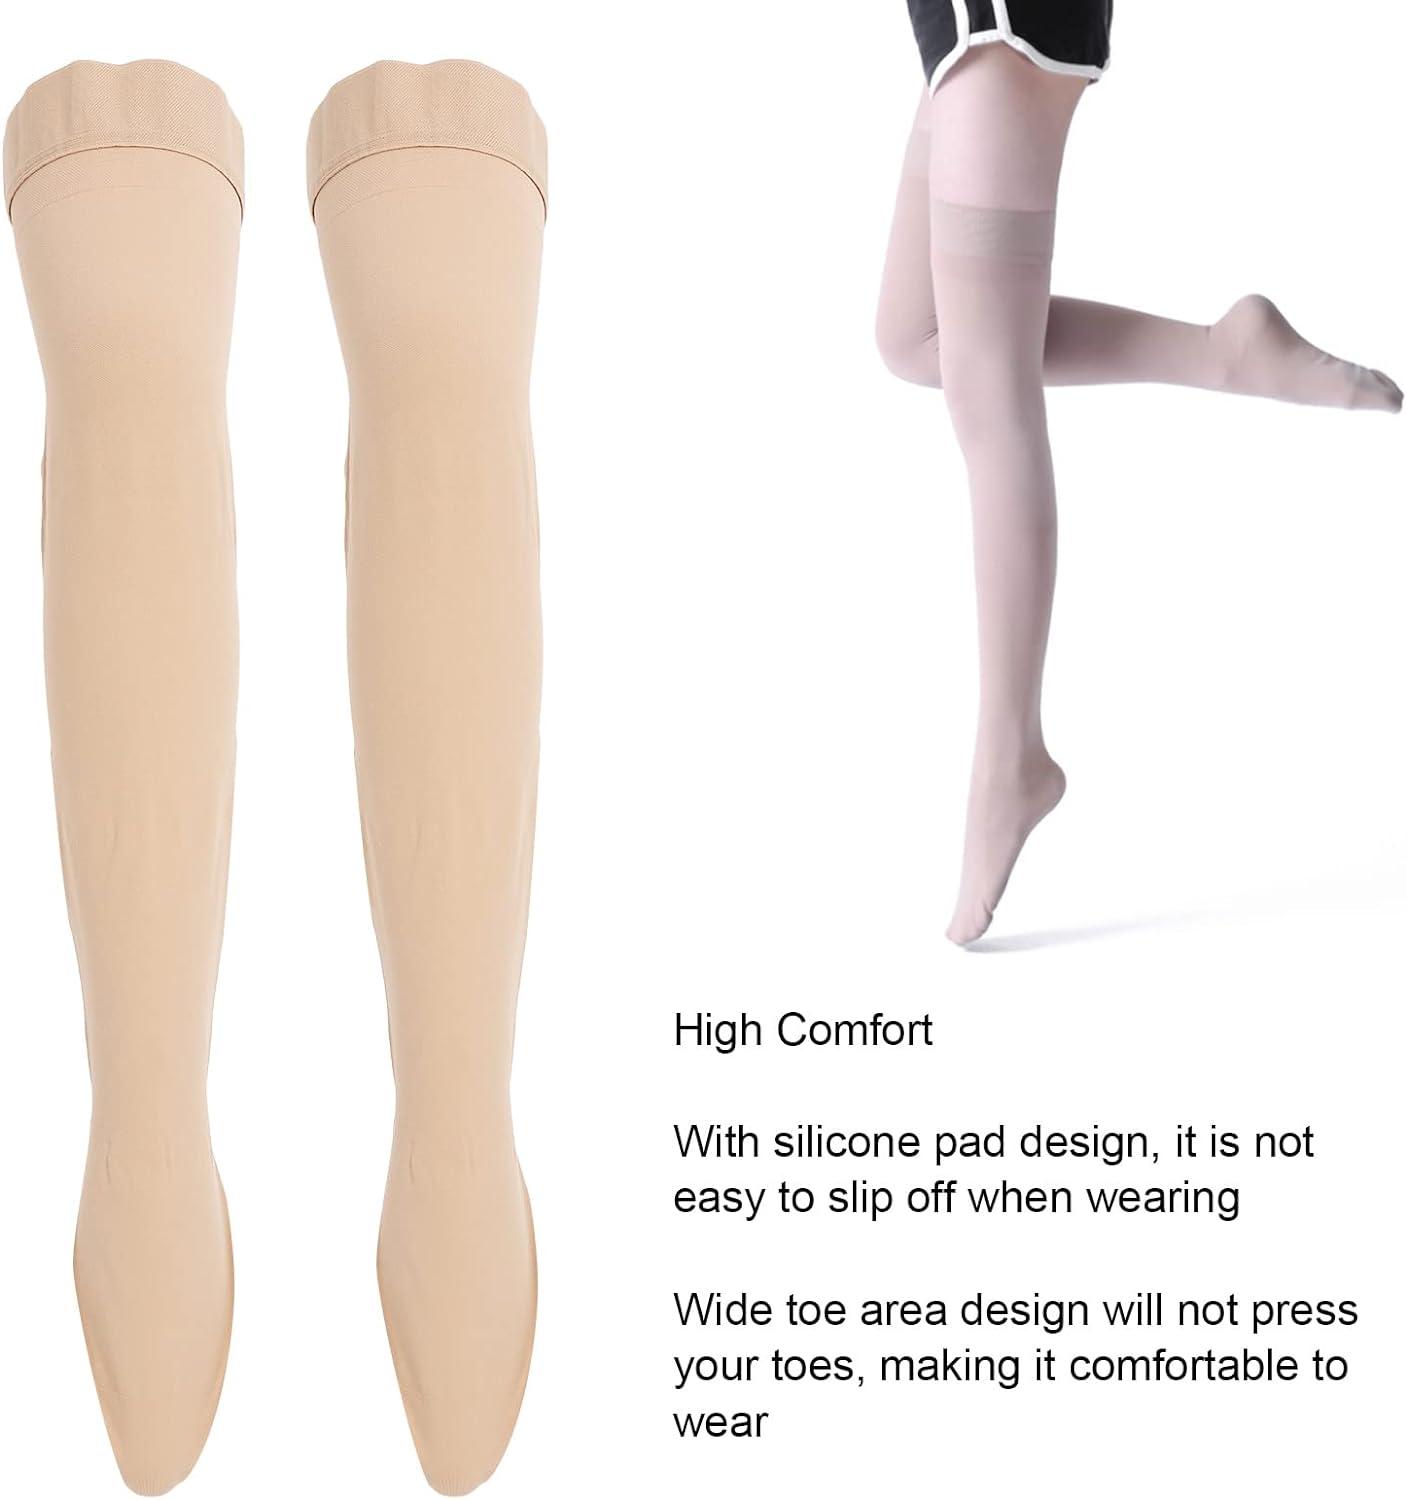 Compression Socks Knee High Support Stockings Leg Thigh Sleeve Sports Men  Women